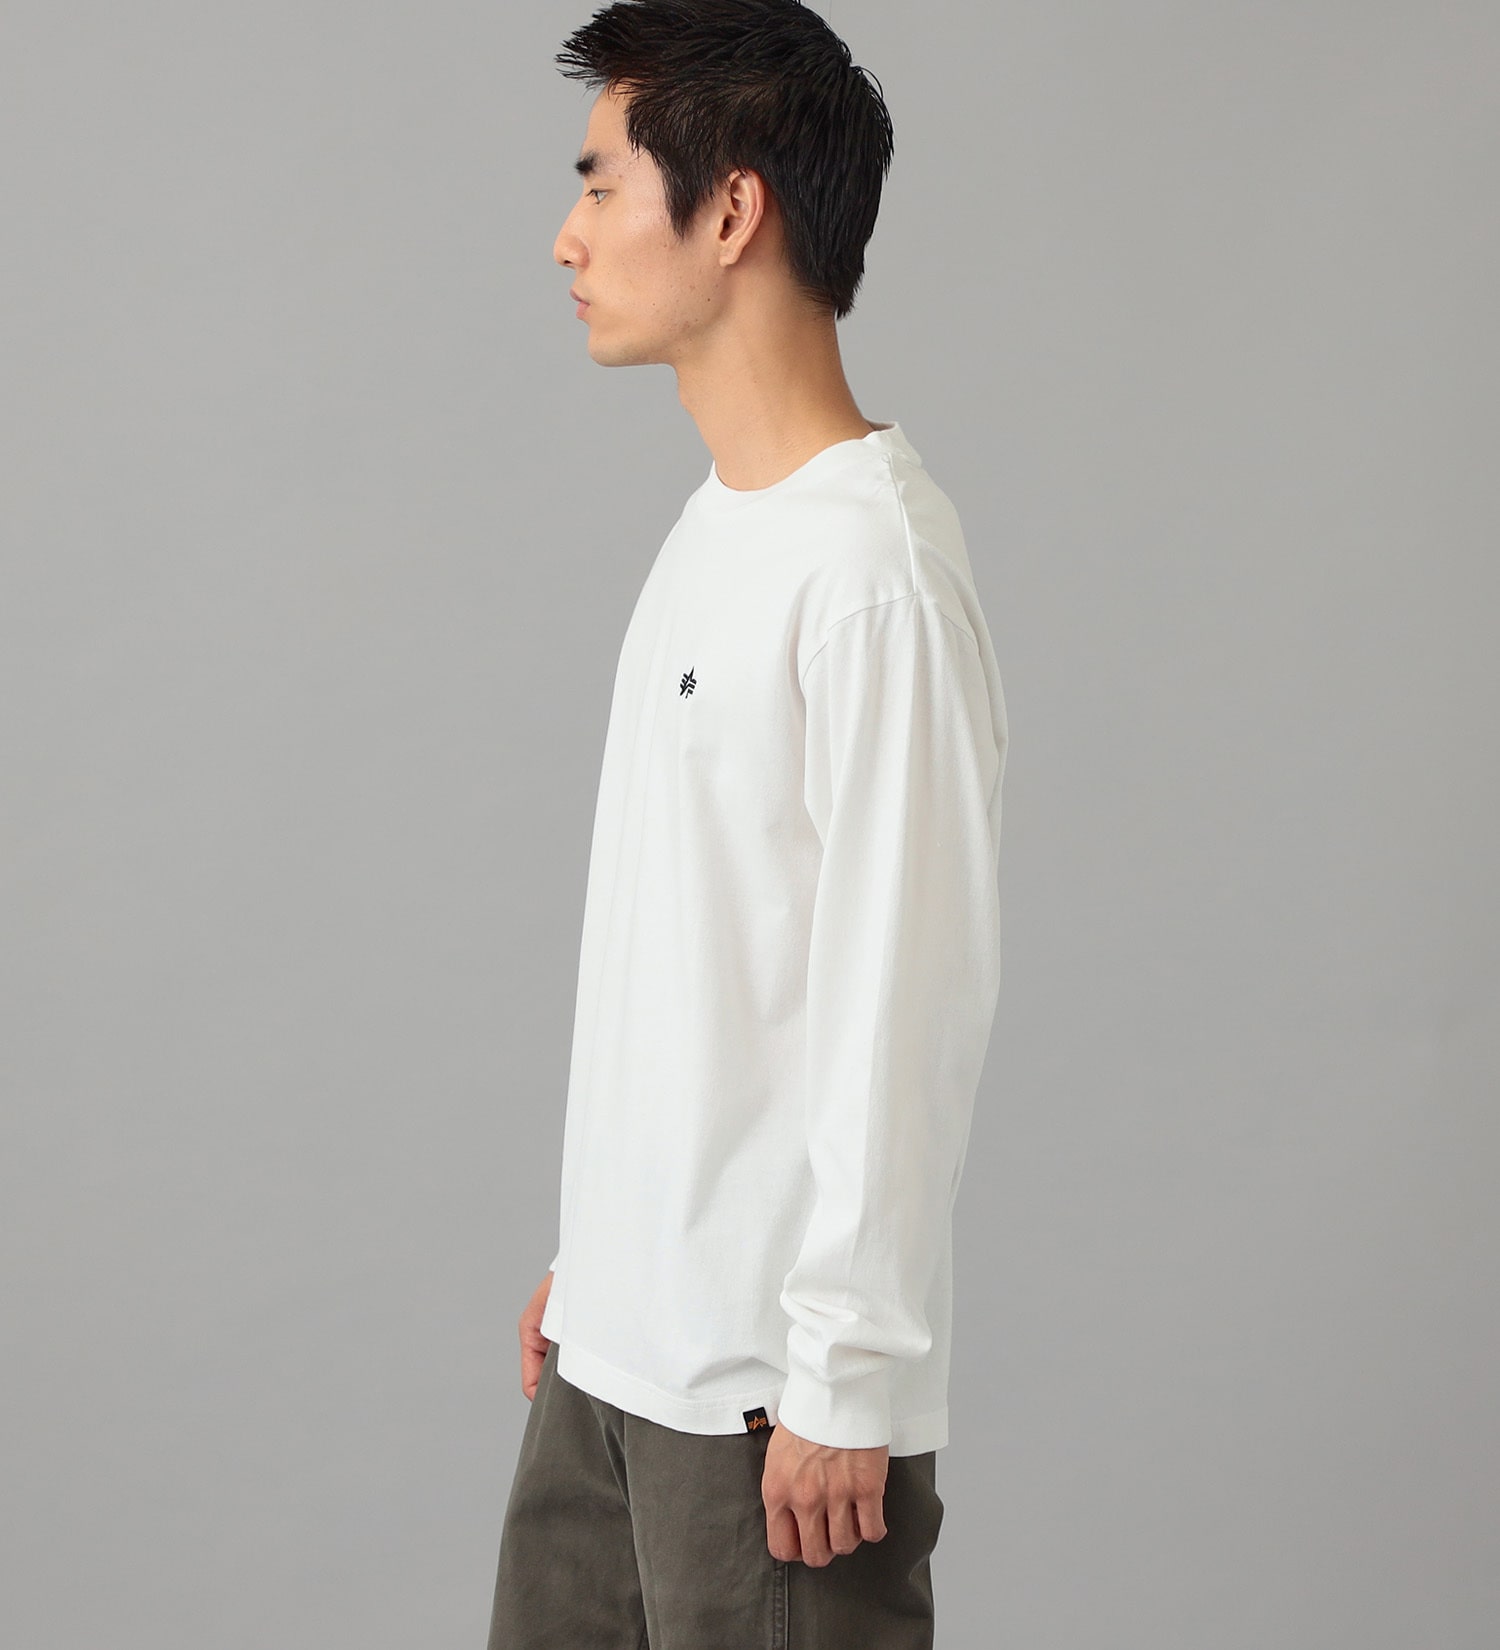 ALPHA(アルファ)のバックプリントボックスロゴ 長袖Tシャツ|トップス/Tシャツ/カットソー/メンズ|ホワイト